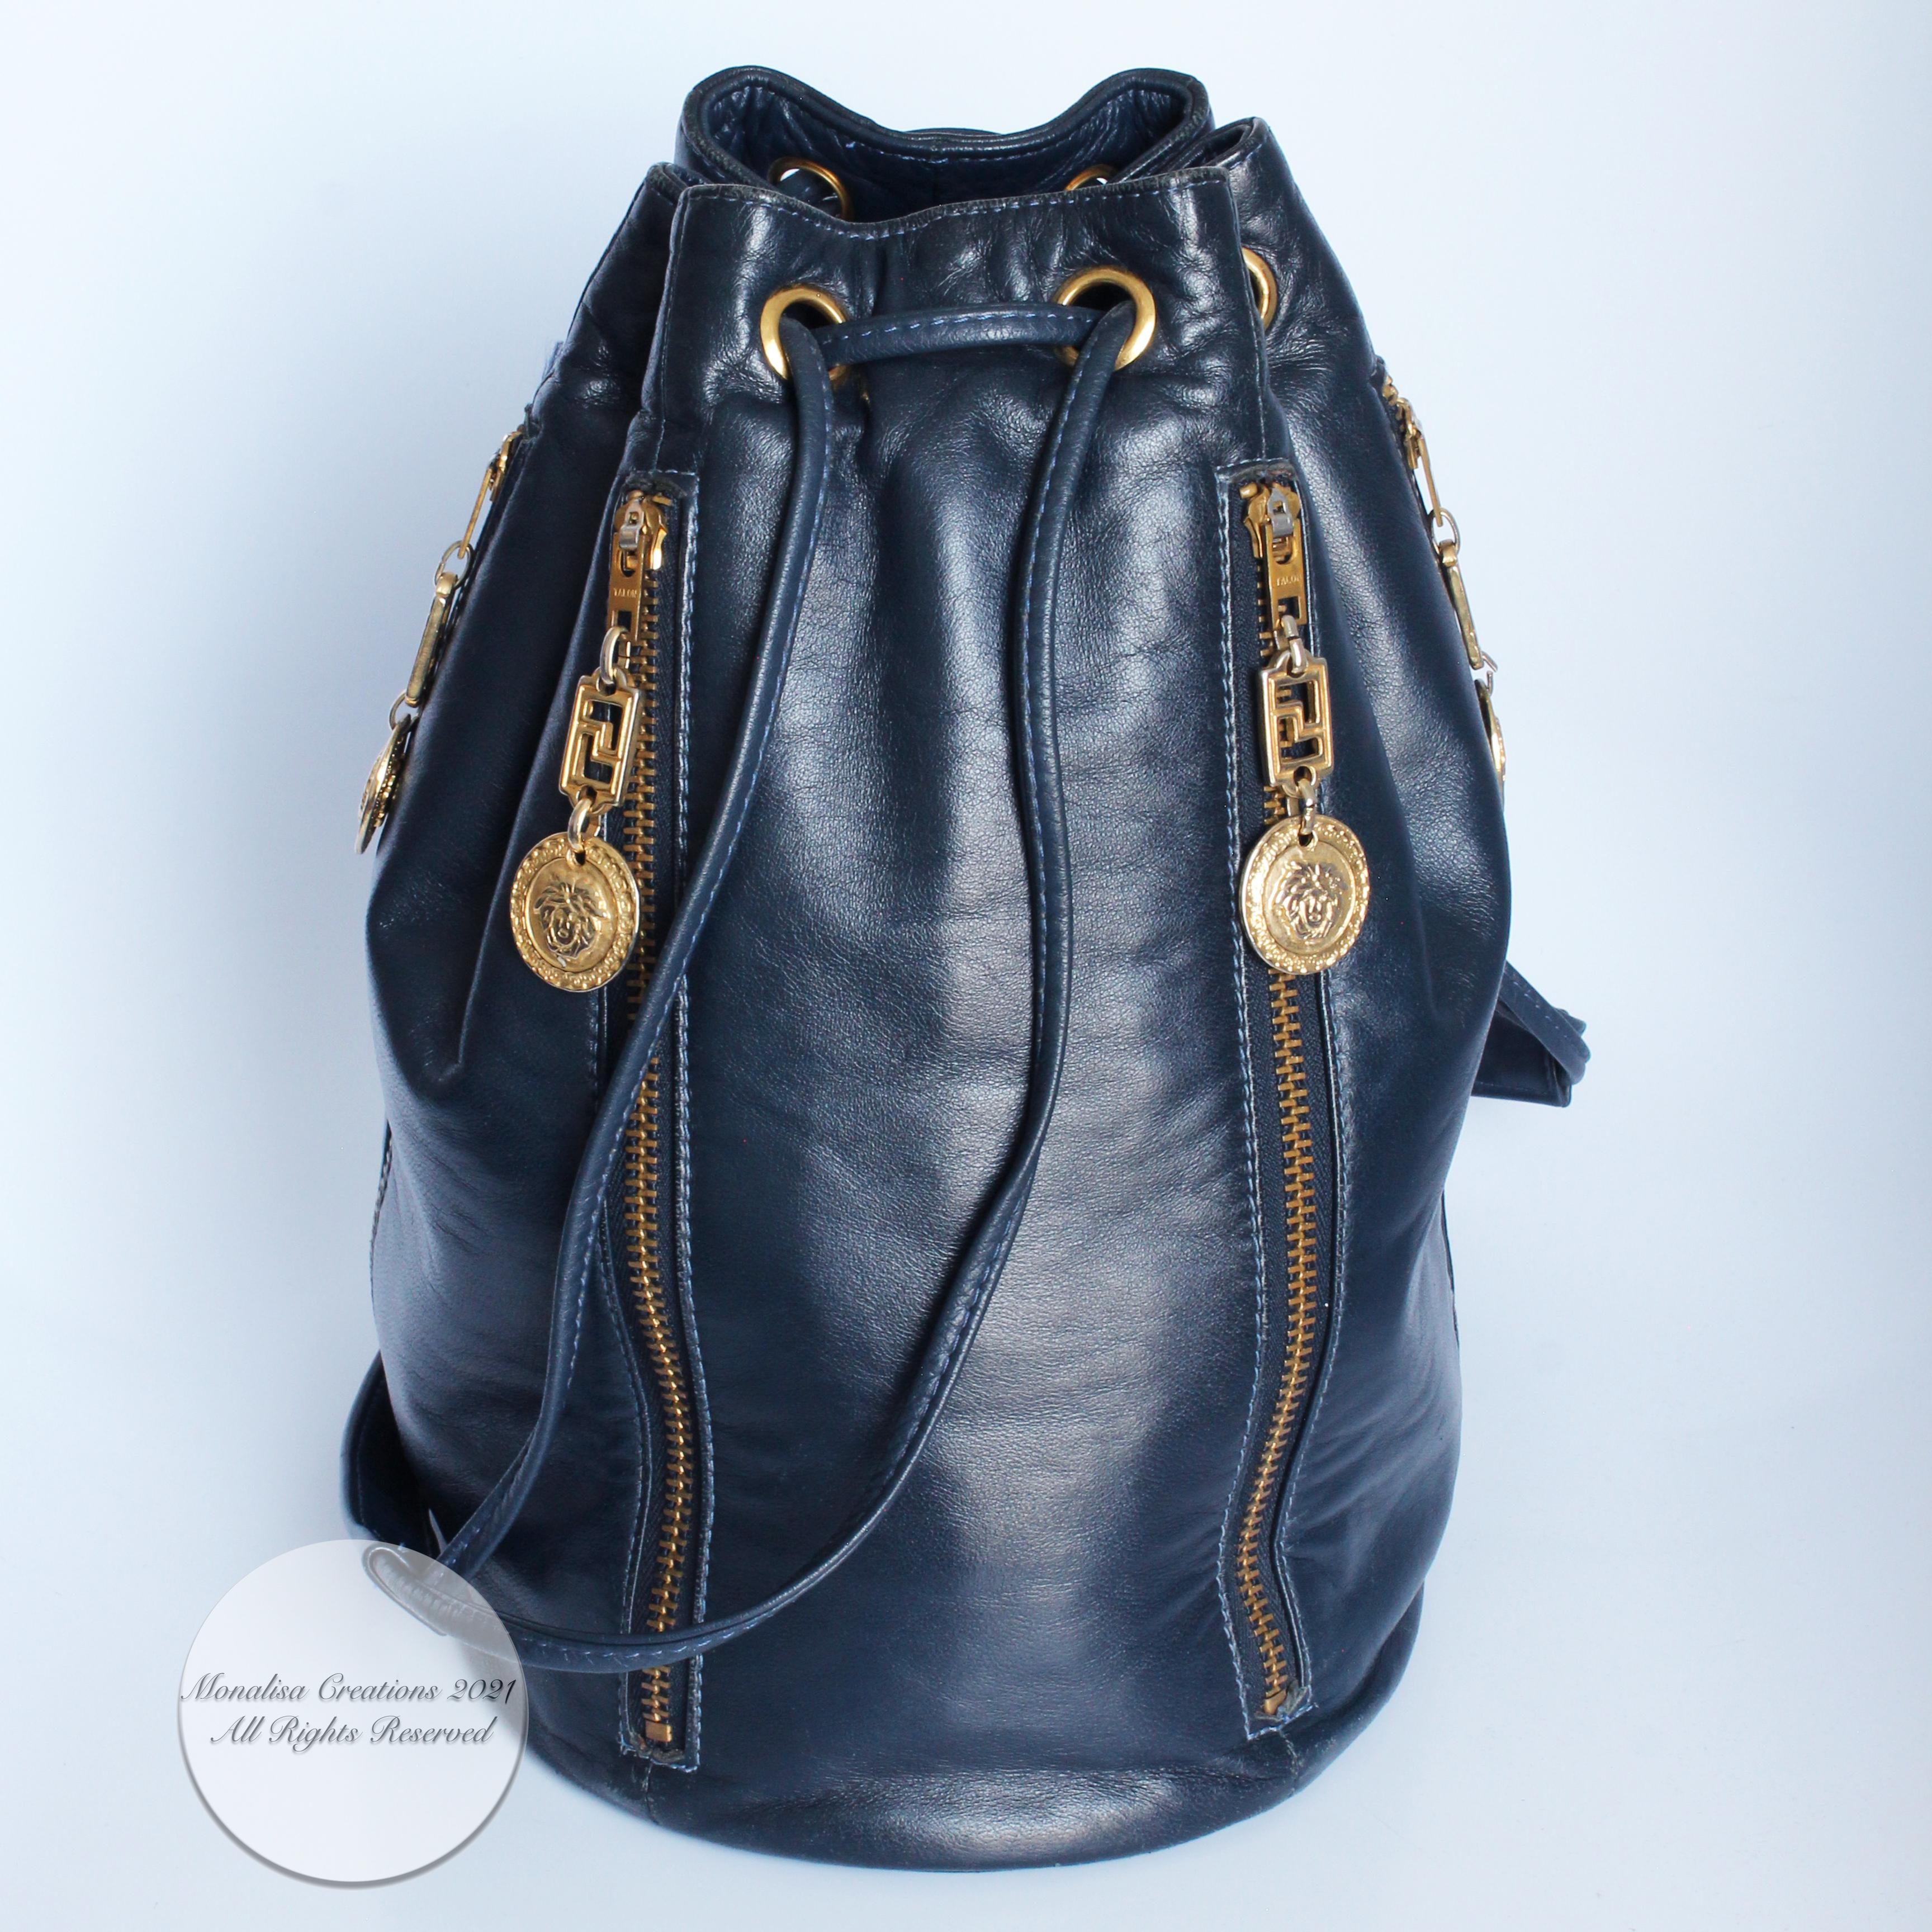 Vintage Versace Bucket Bag Navy Leather Gold Medusa Medallions 